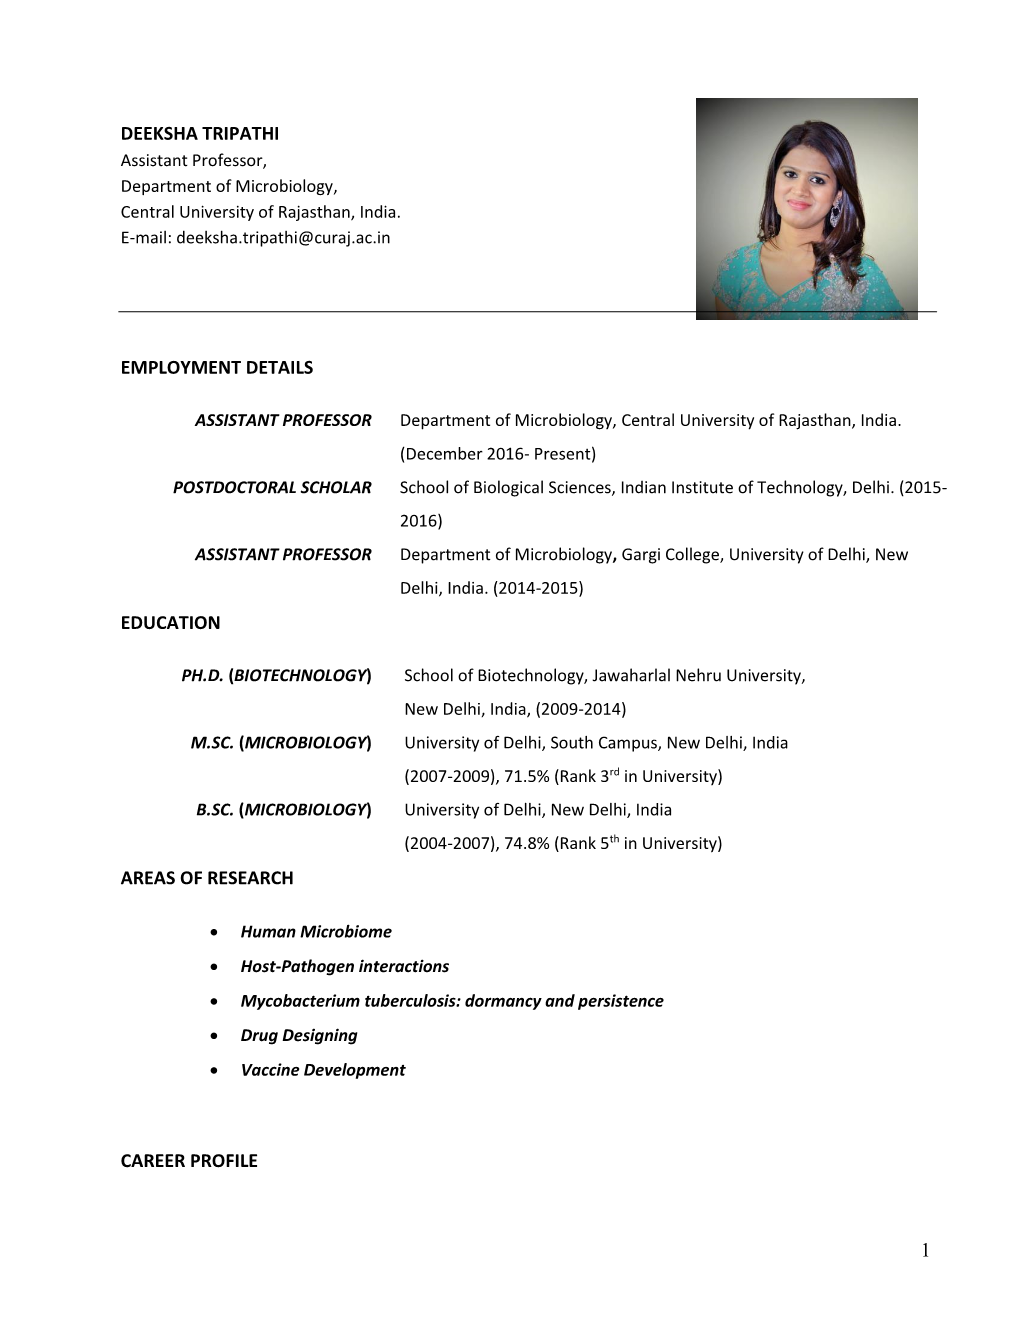 1 Deeksha Tripathi Employment Details Education Areas of Research Career Profile